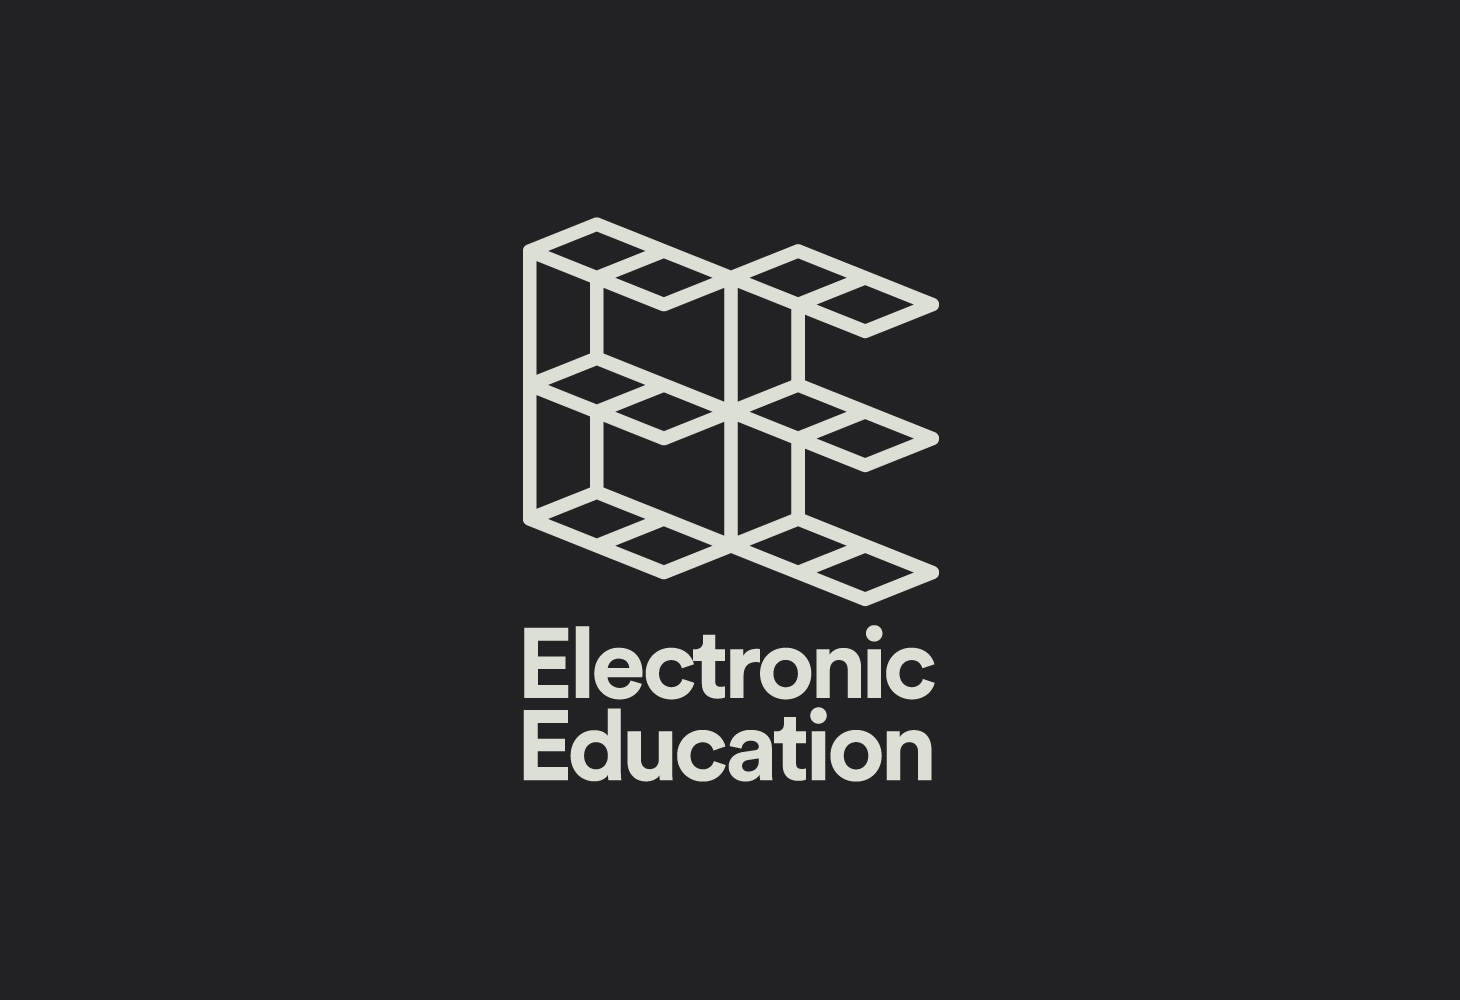 EE - Logotype and mark